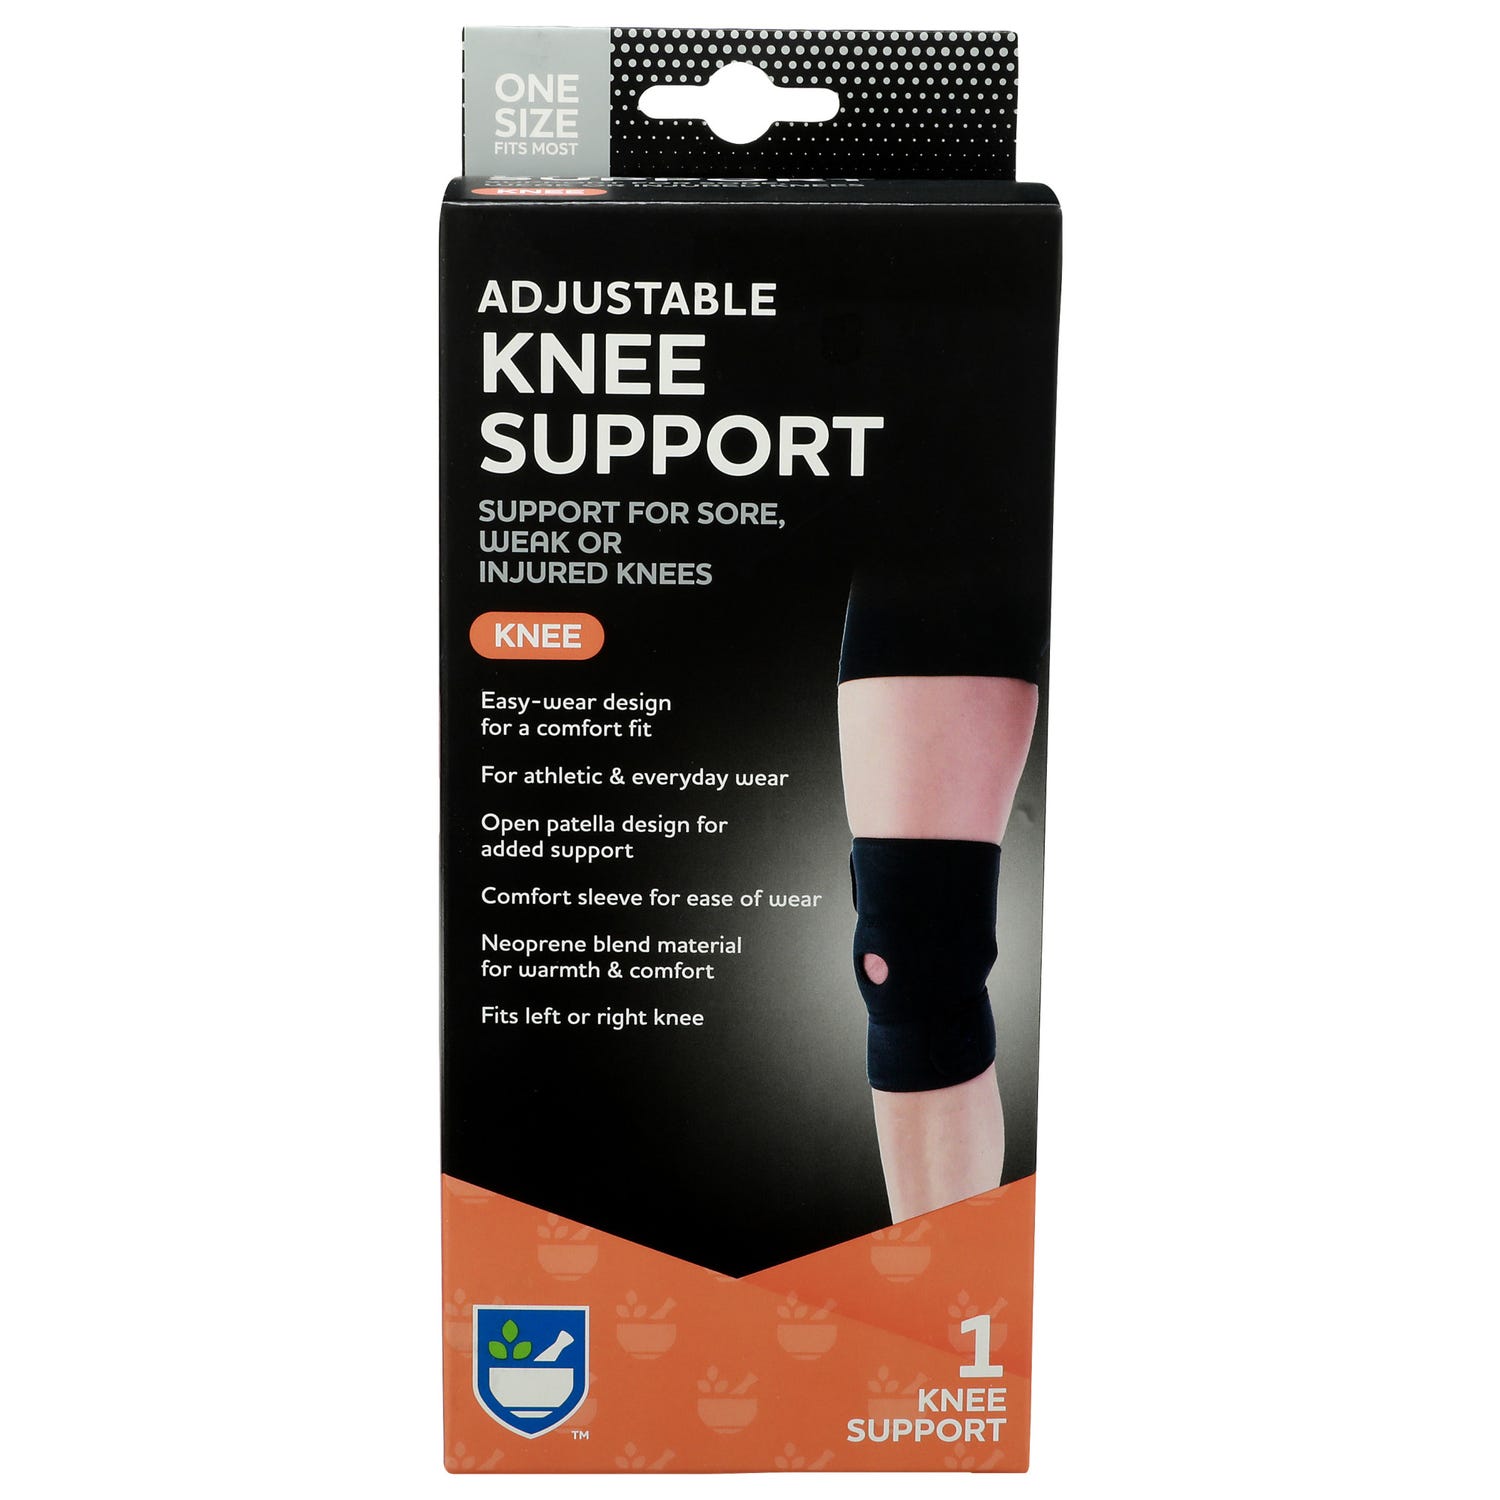 Rite Aid Adjustable Knee Support